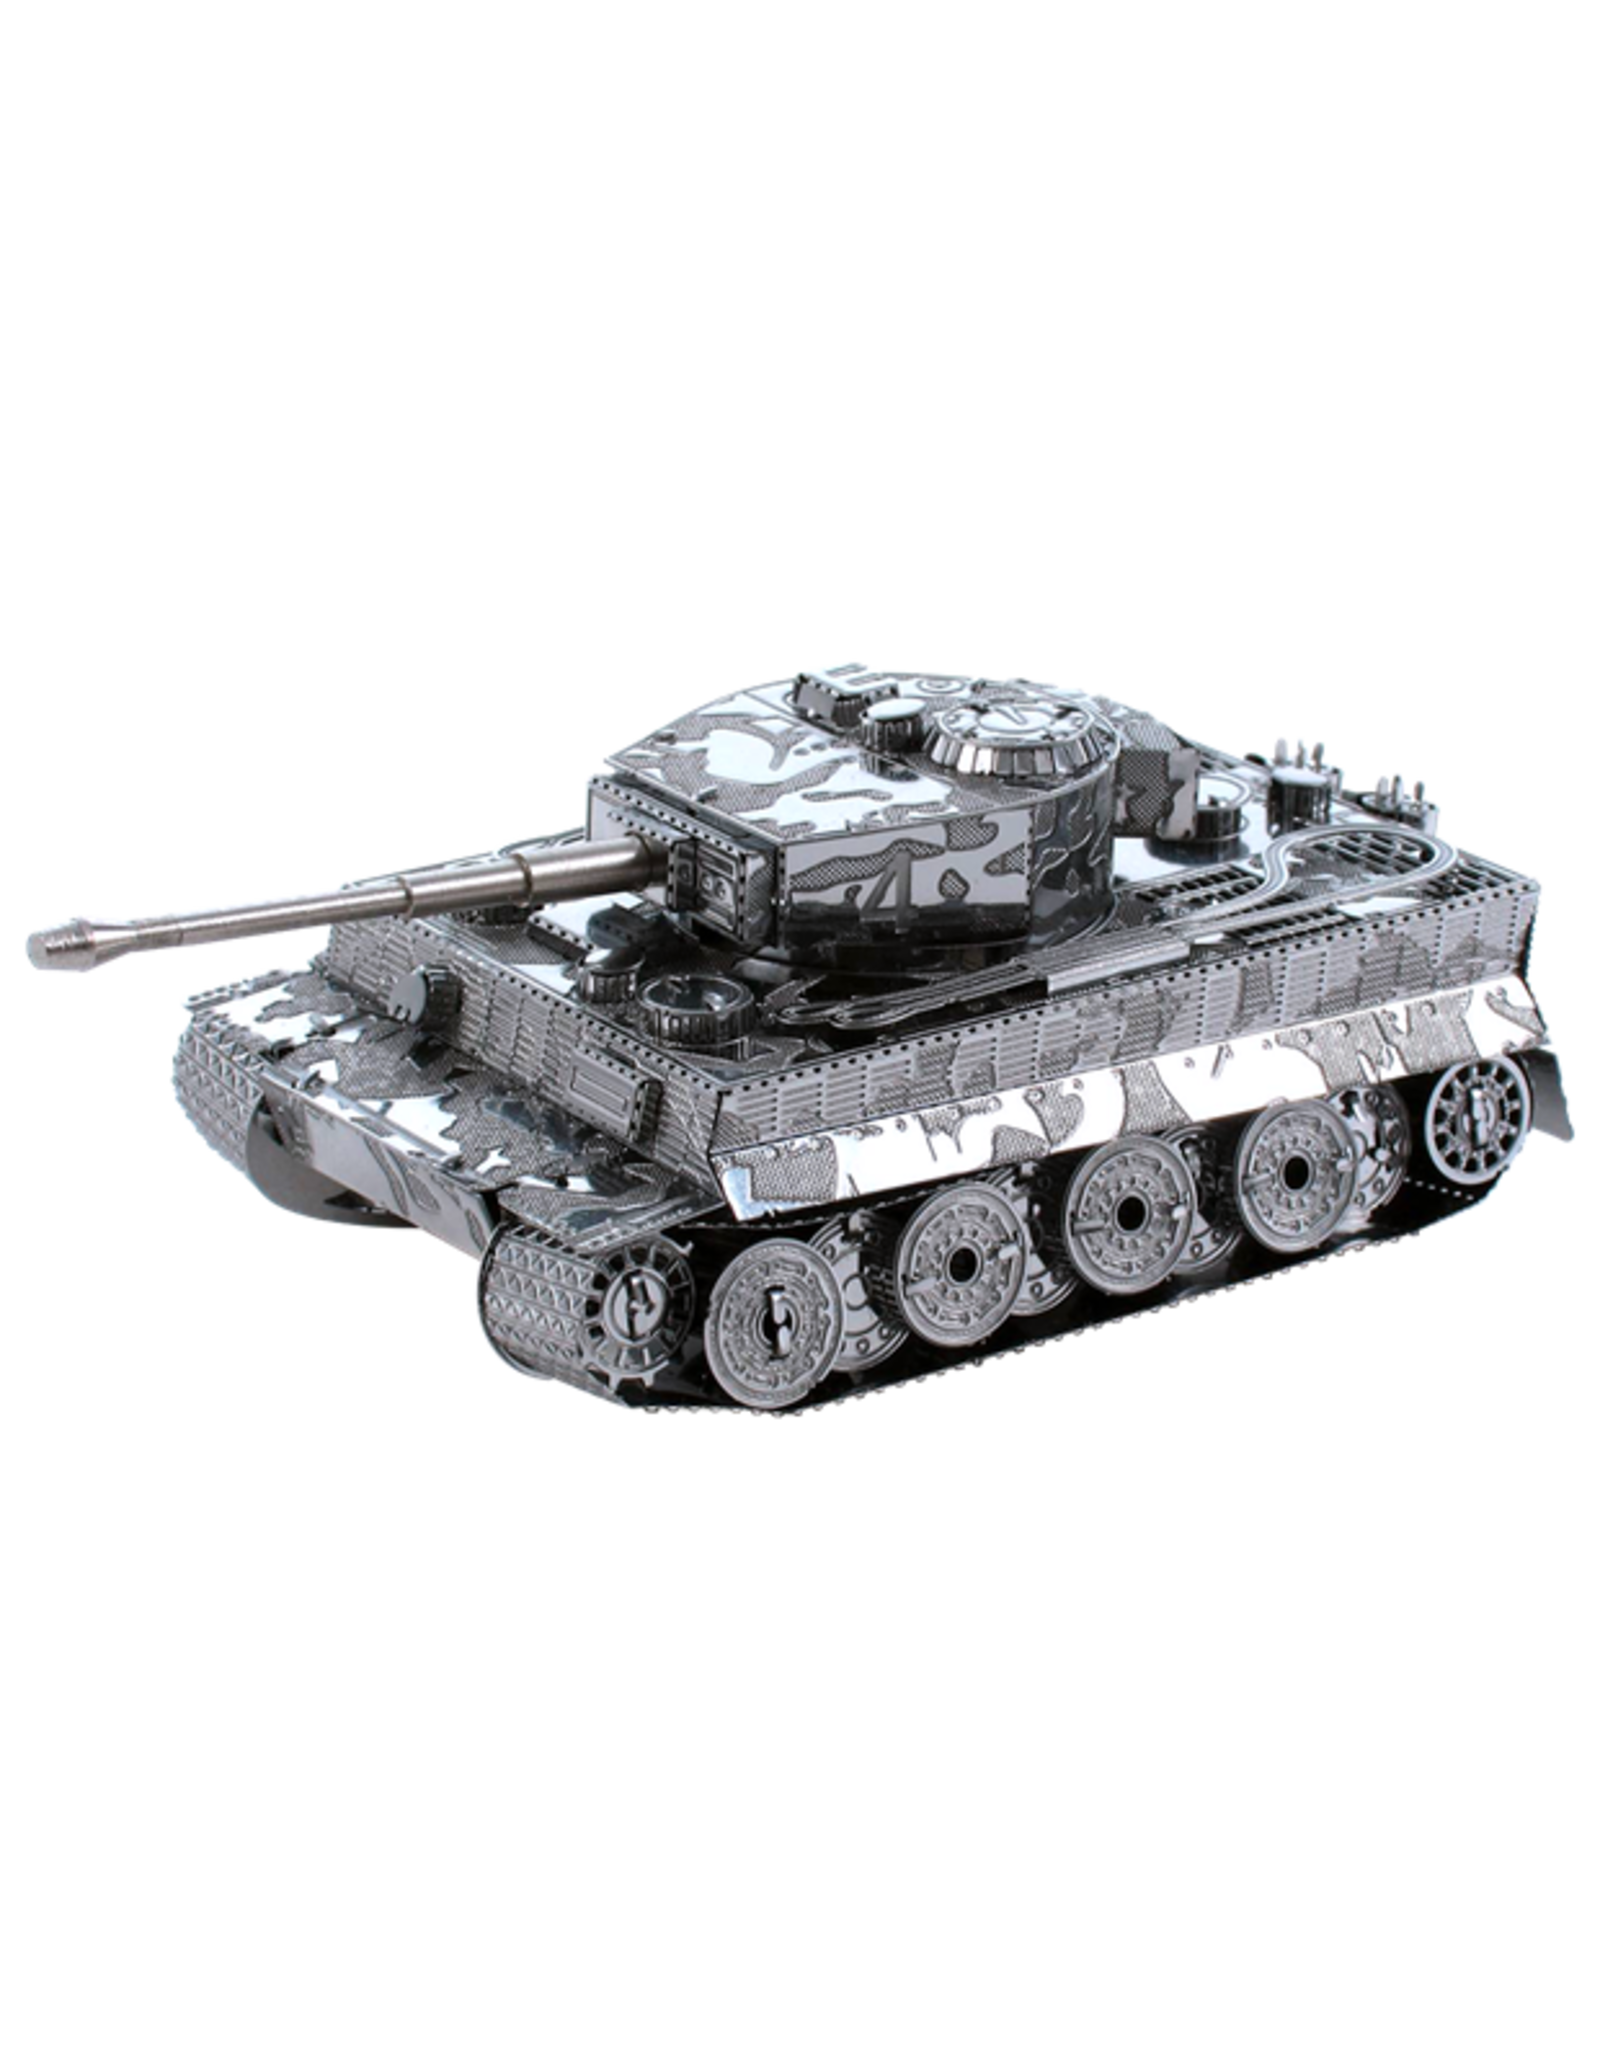 Metal Earth: Tiger I Tank